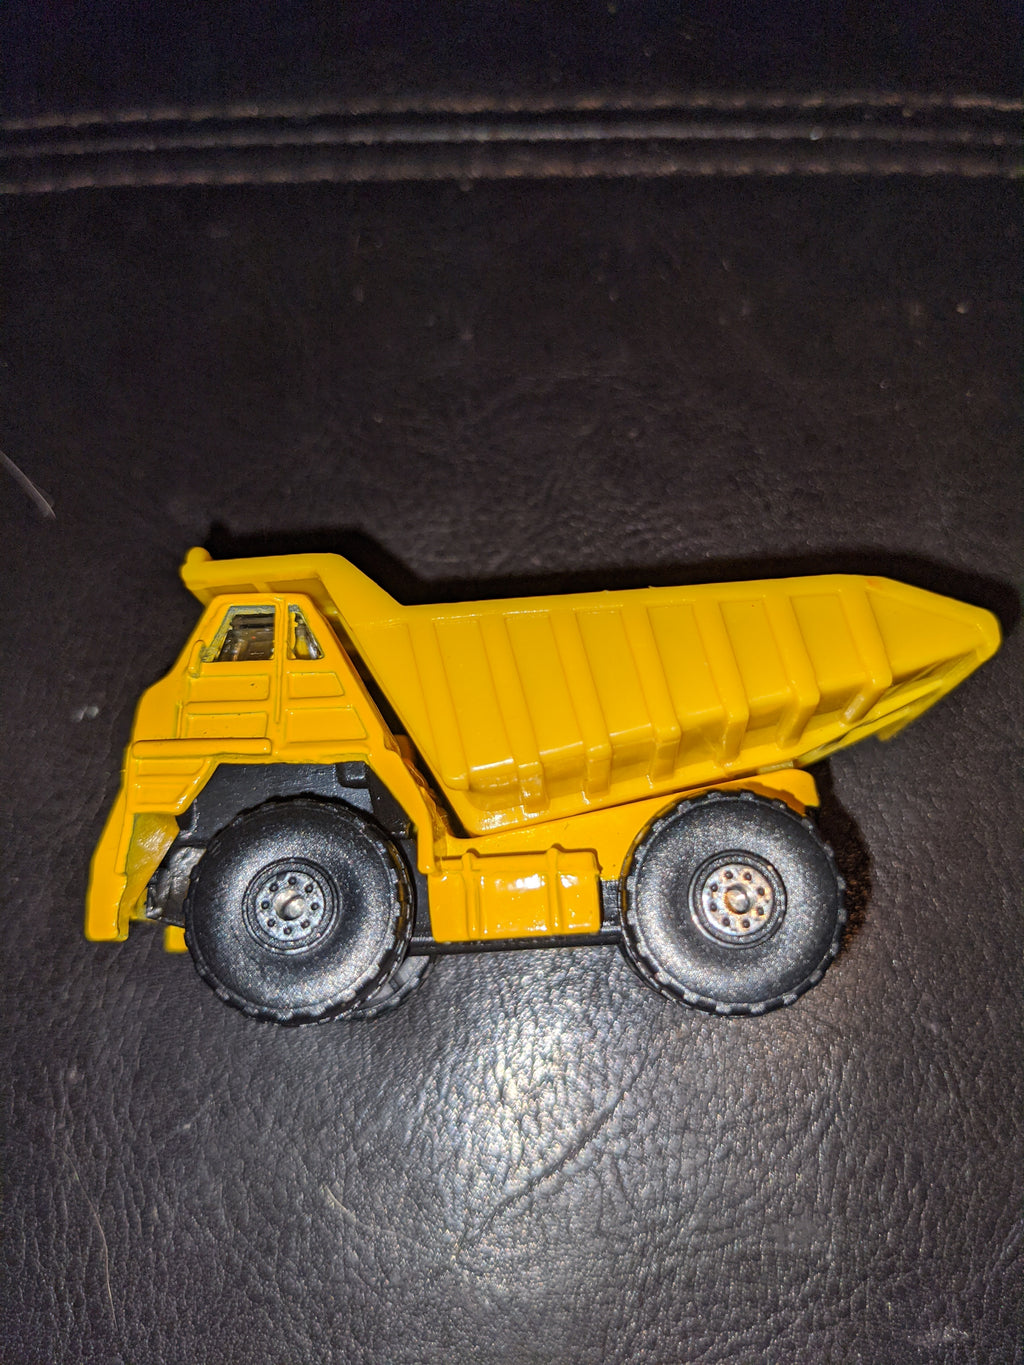 Maisto City Construction Yellow Dump Truck Die-Cast